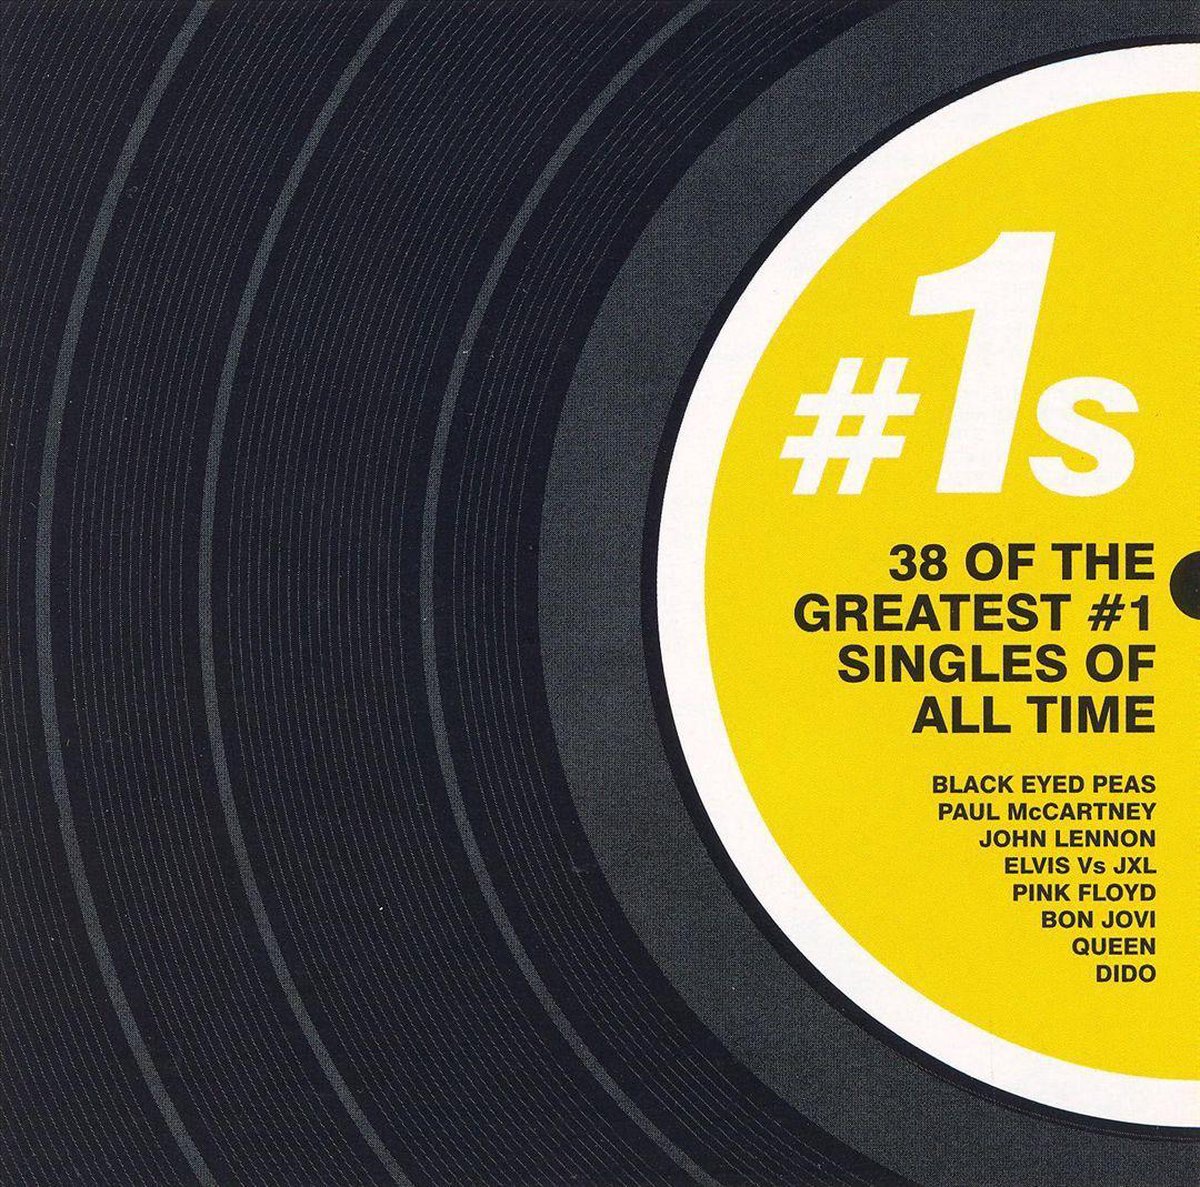 Лейбл: Universal Music. Сборник лучших синглов 1. Диск Culture Club Greatest Hits CD. Jazz 1s Hits (Universal Music Group International 2007) фото альбома.